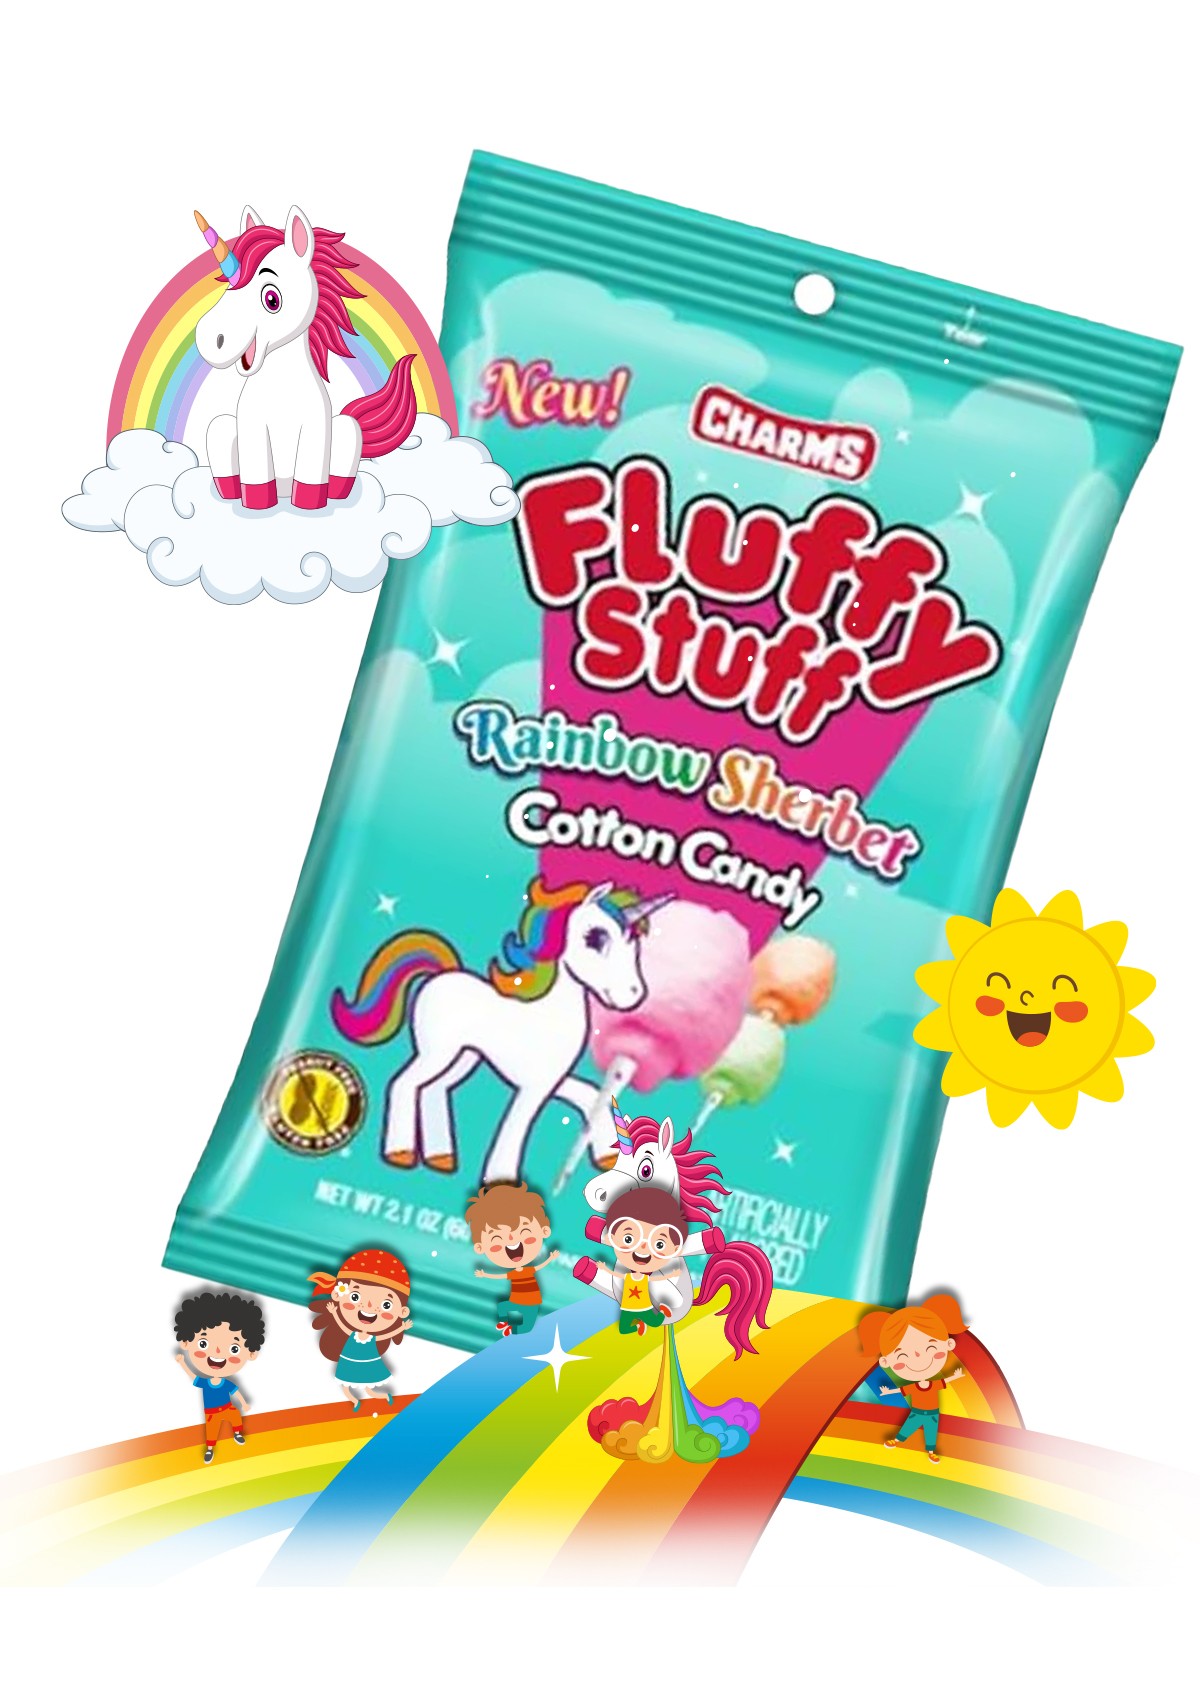 Charms Fluffy Stuff Rainbow Unicorn Cotton Candy Zuckerwatte